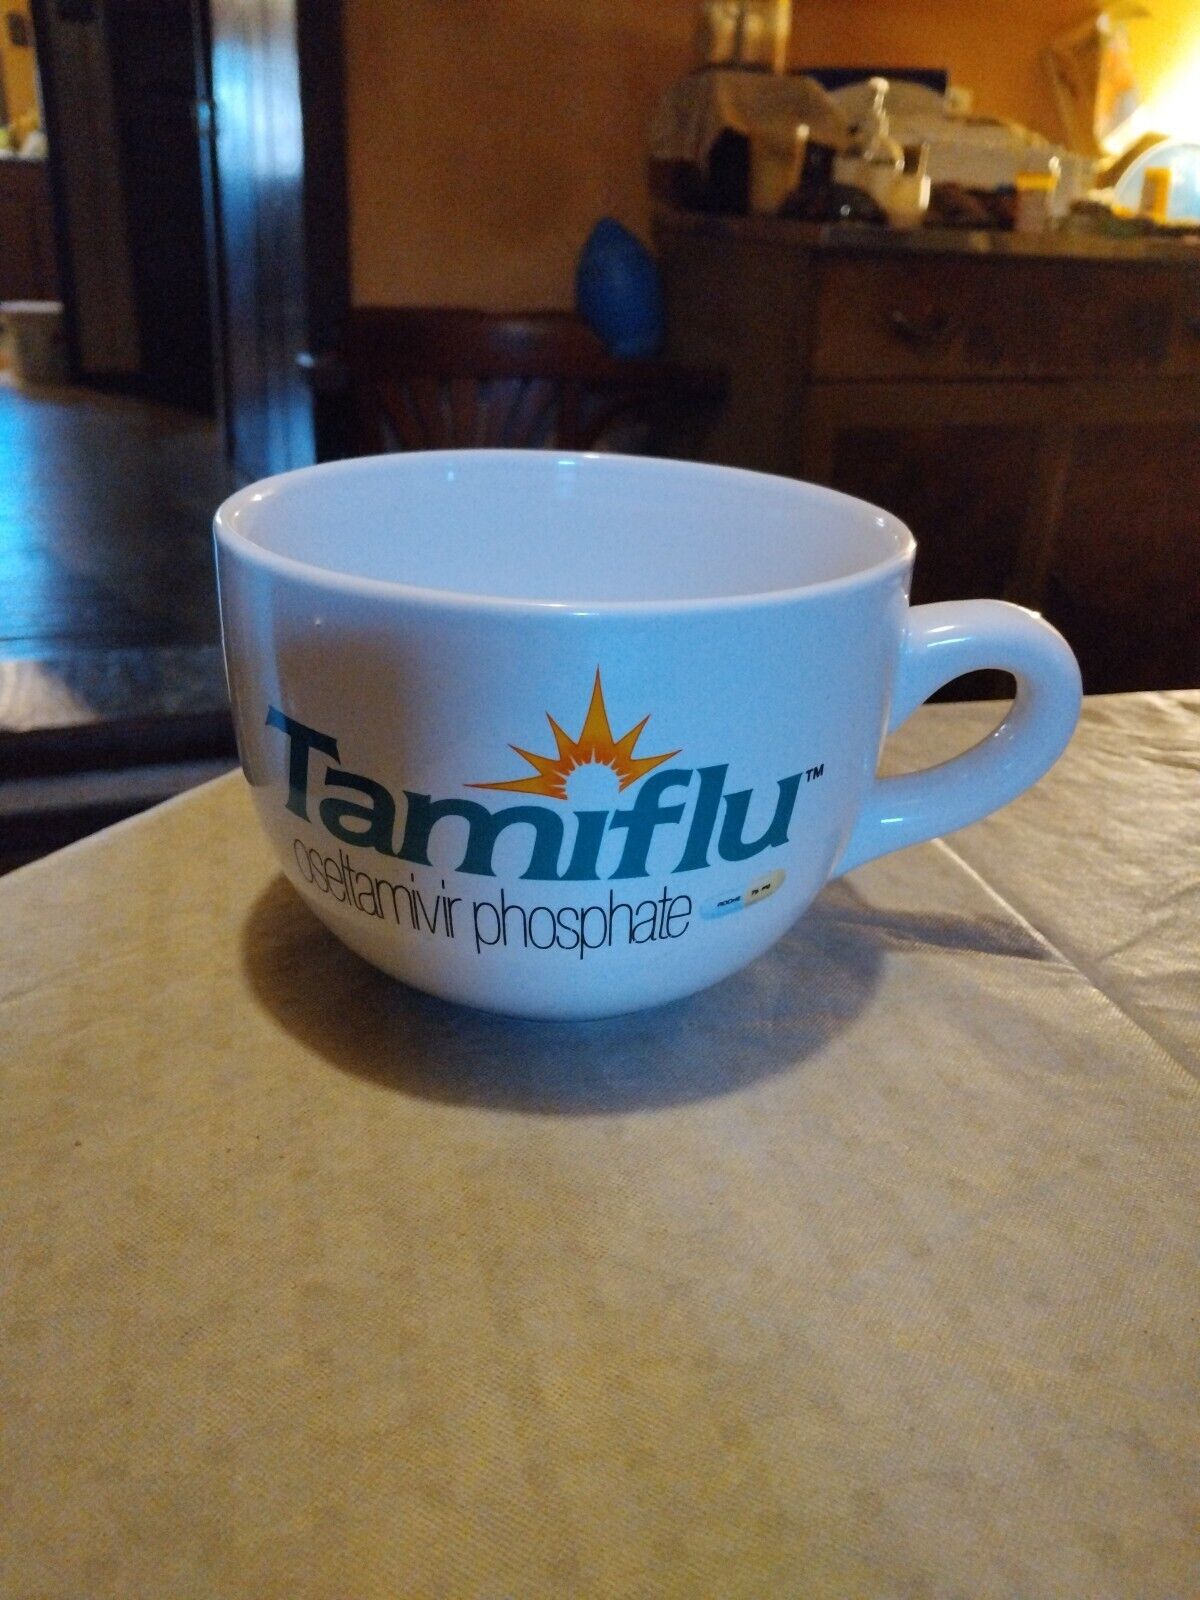 Tamiflu Pharmaceutical Medical Advertising Mug Soup Bowl Extra Large 